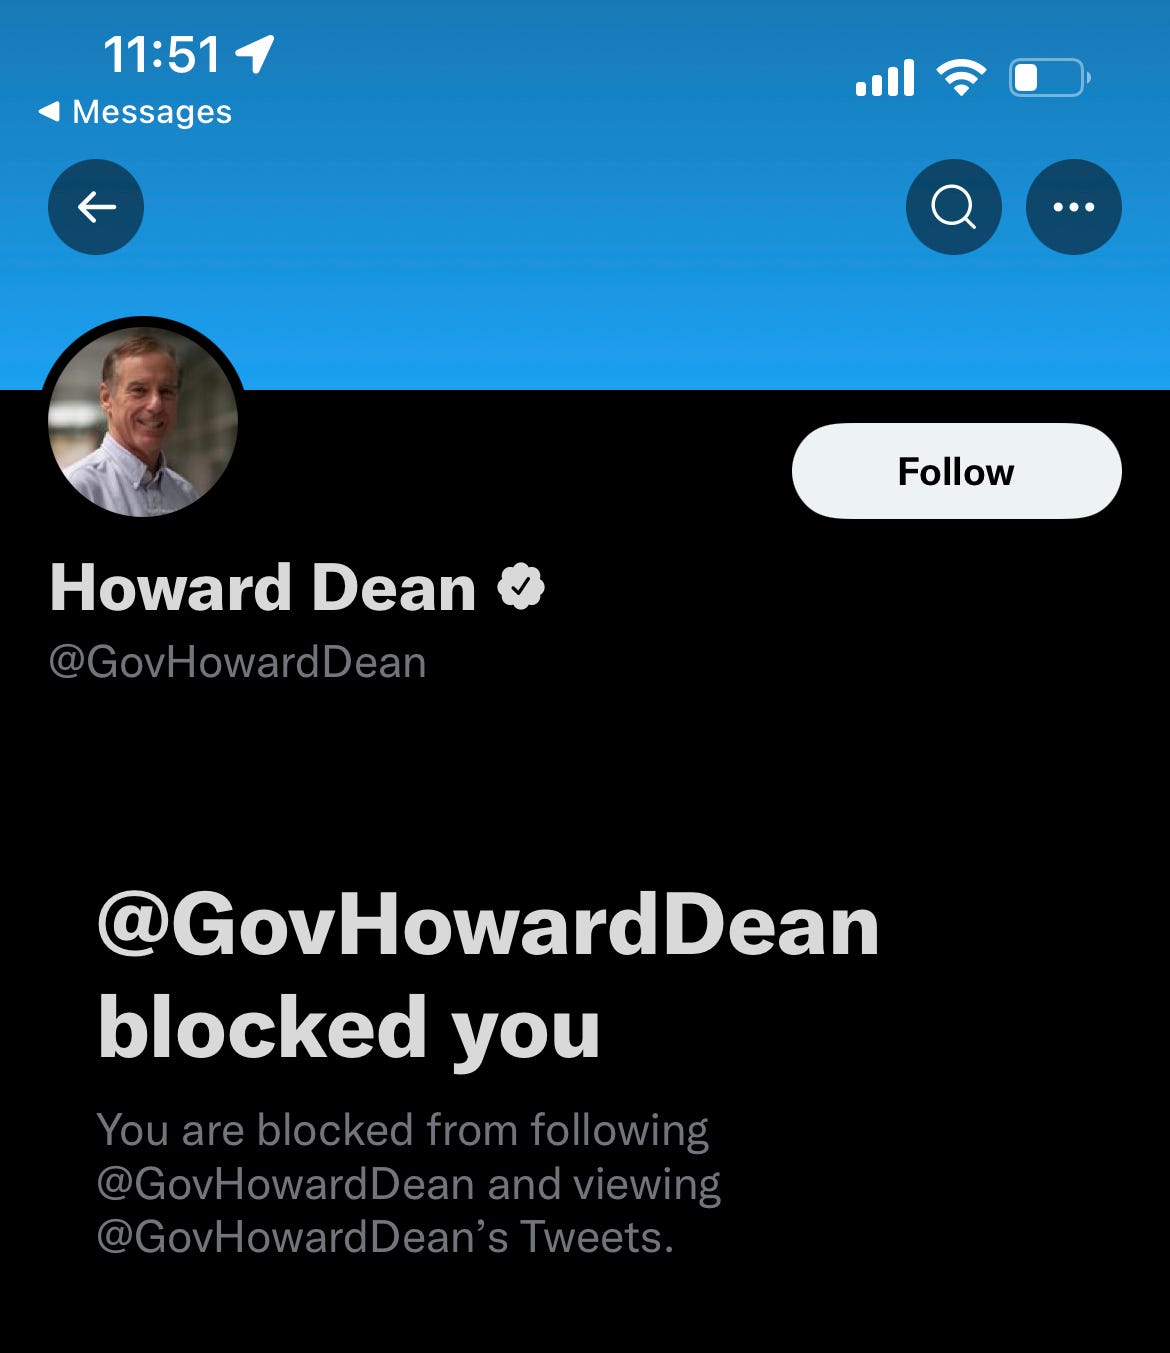 A screenshot from Twitter: "@GovHowardDean blocked you."